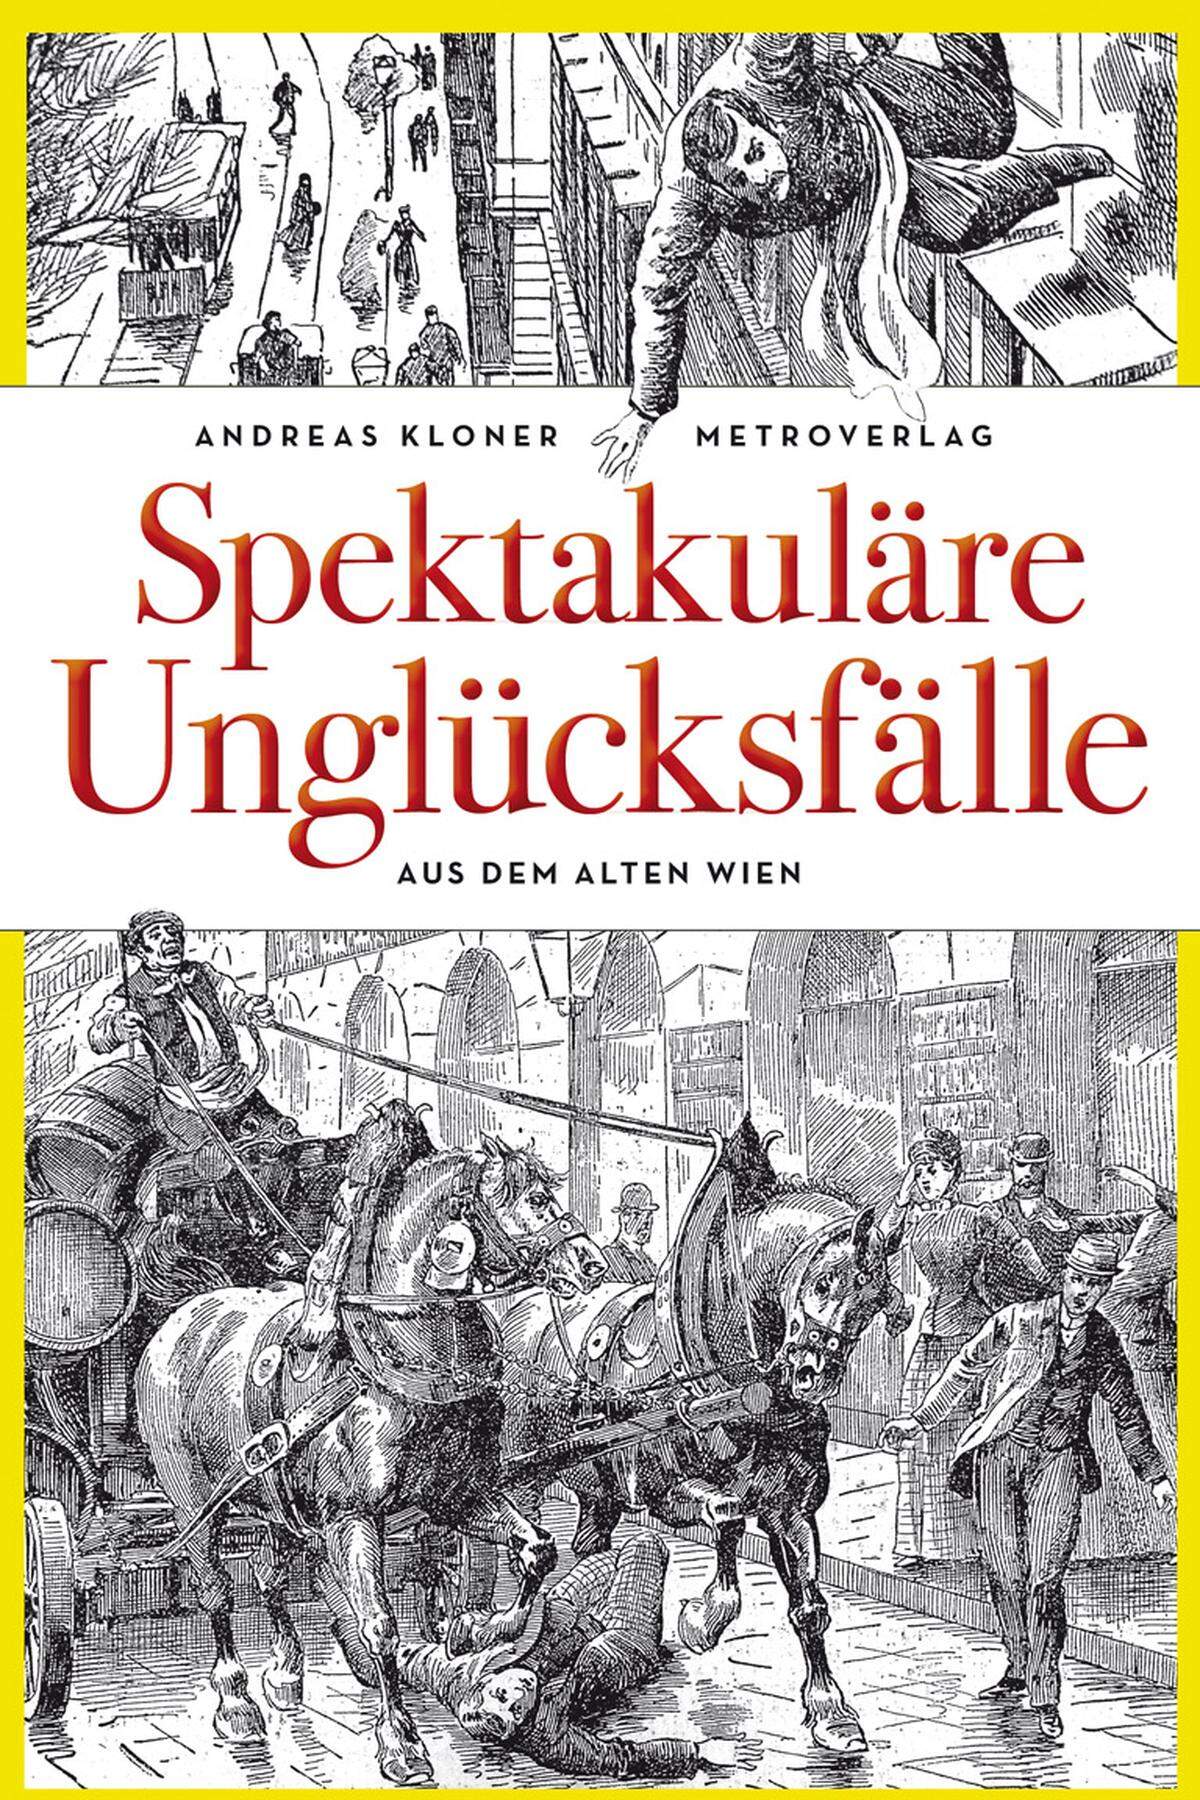 Alle Illustrationen aus:Andreas Kloner: Spektakuläre Unglücksfälle aus dem Alten Wien160 SeitenMetroverlag